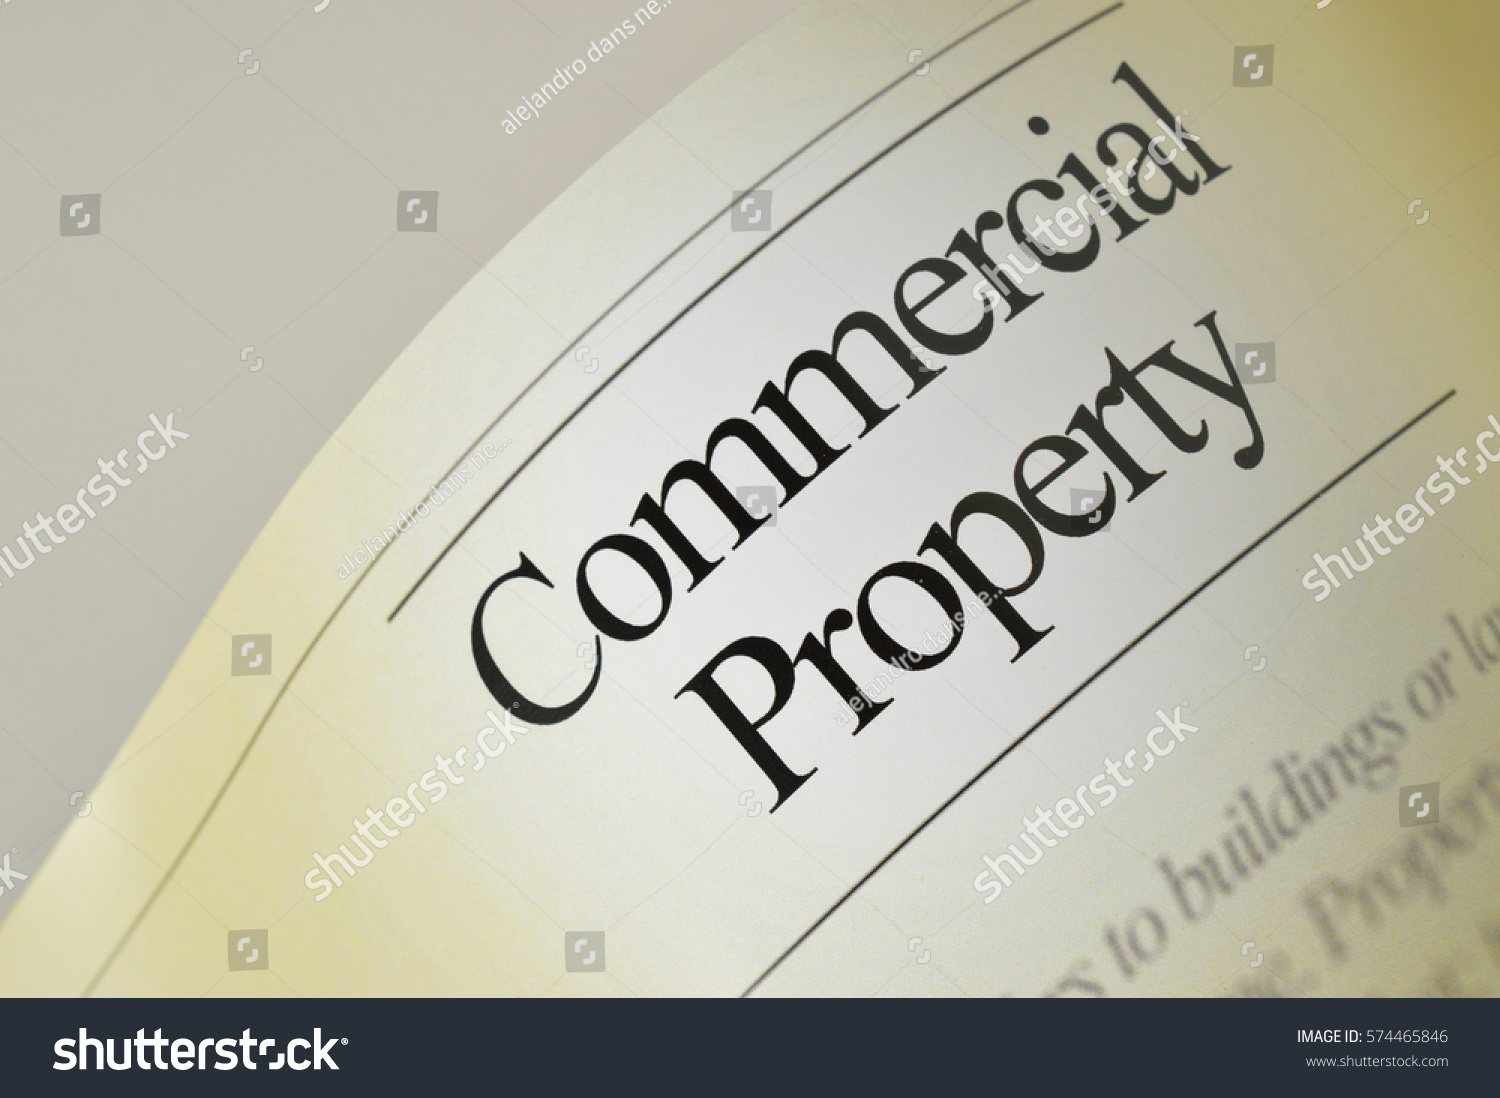 Commercial property headlines #574465846